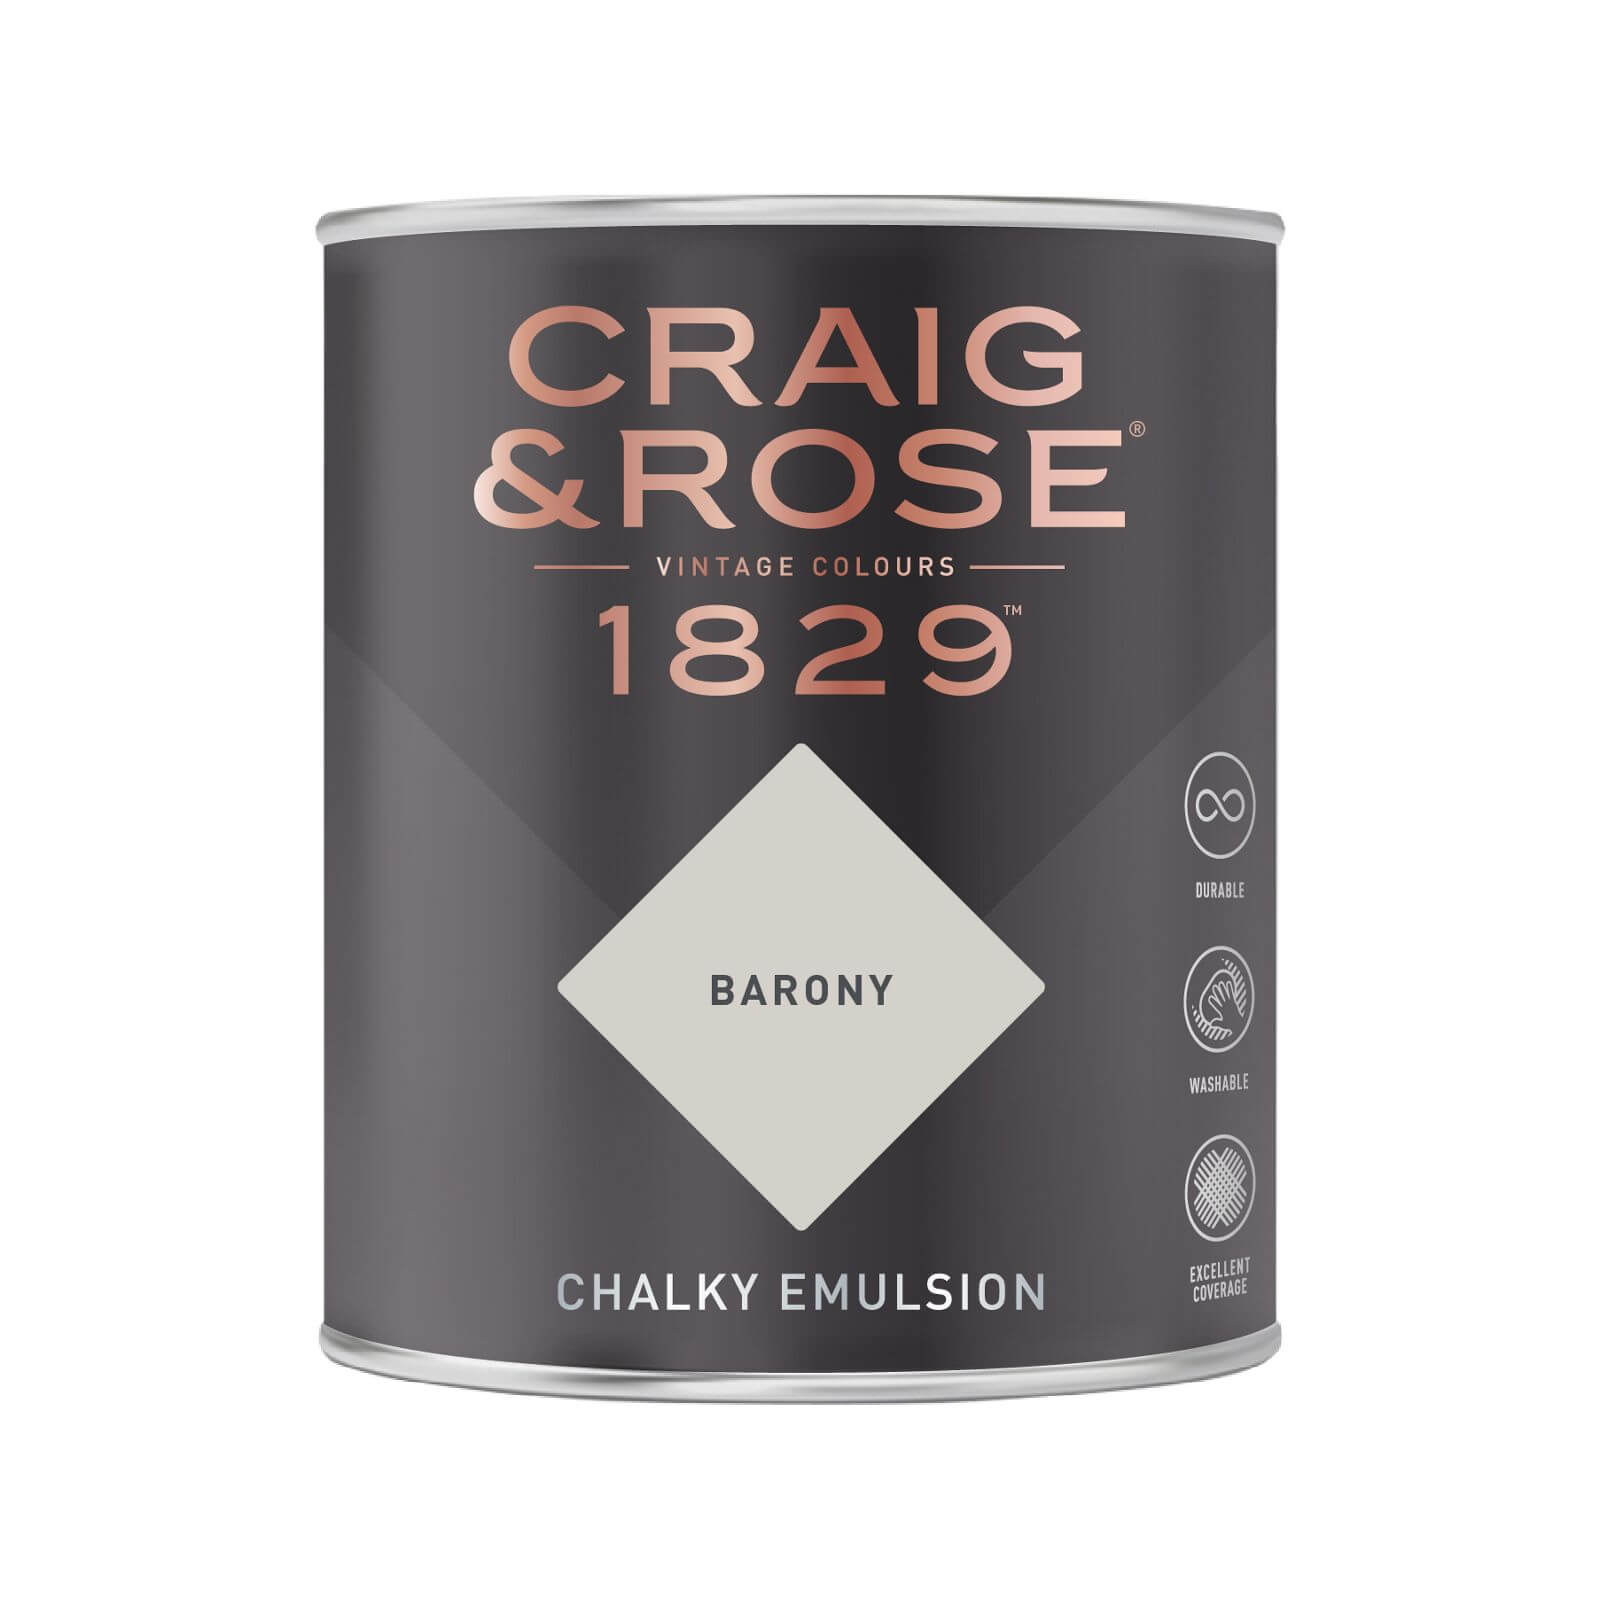 Craig & Rose 1829 Chalky Emulsion Paint Barony - 750ml